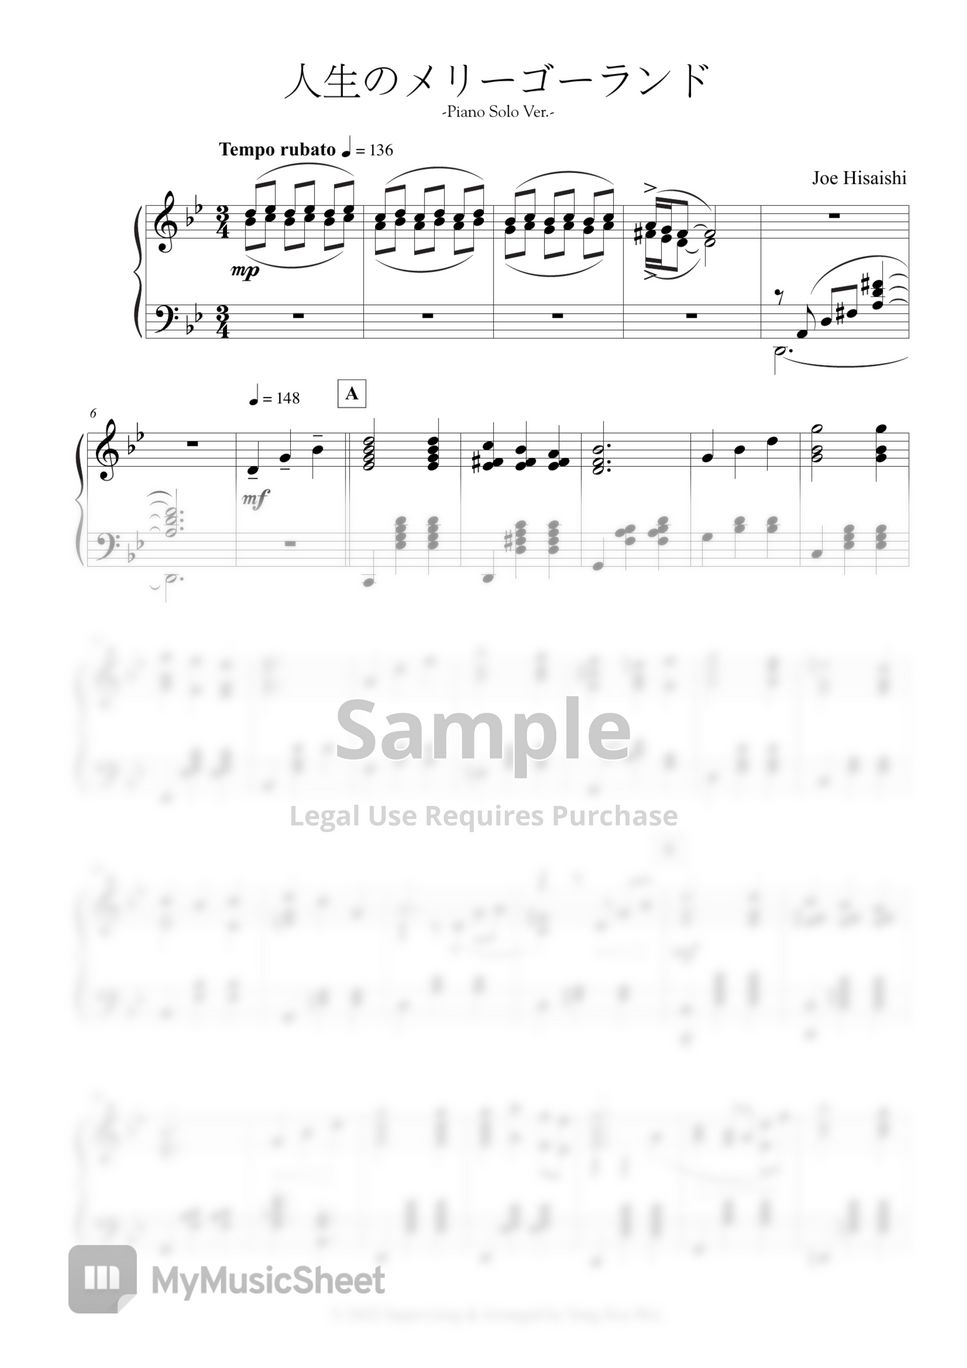 Joe Hisaishi - Merry-Go-Round of Life -Piano Solo Ver.- (Original Edition) by Yang Szu-Wei